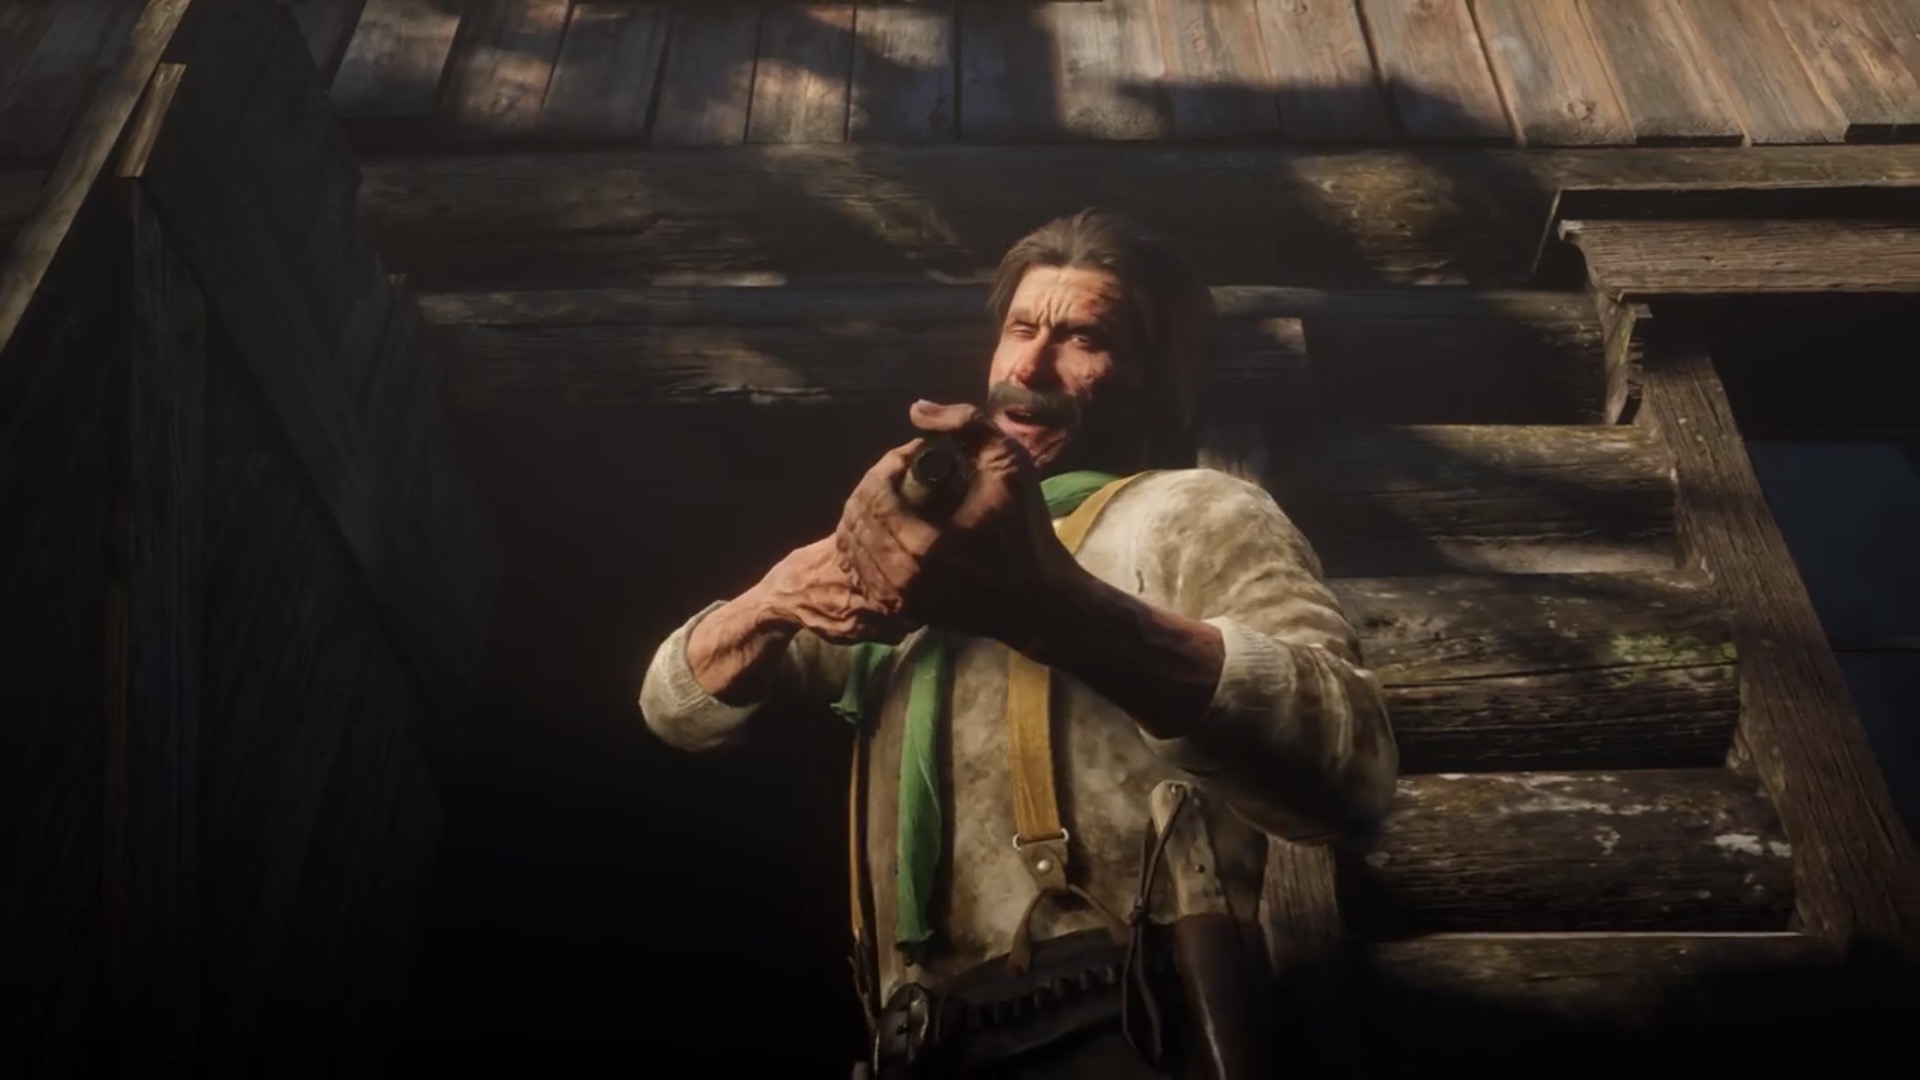 Red Dead Redemption 2 Gameplay Trailer Shocks With Wild West Violence1920 x 1080